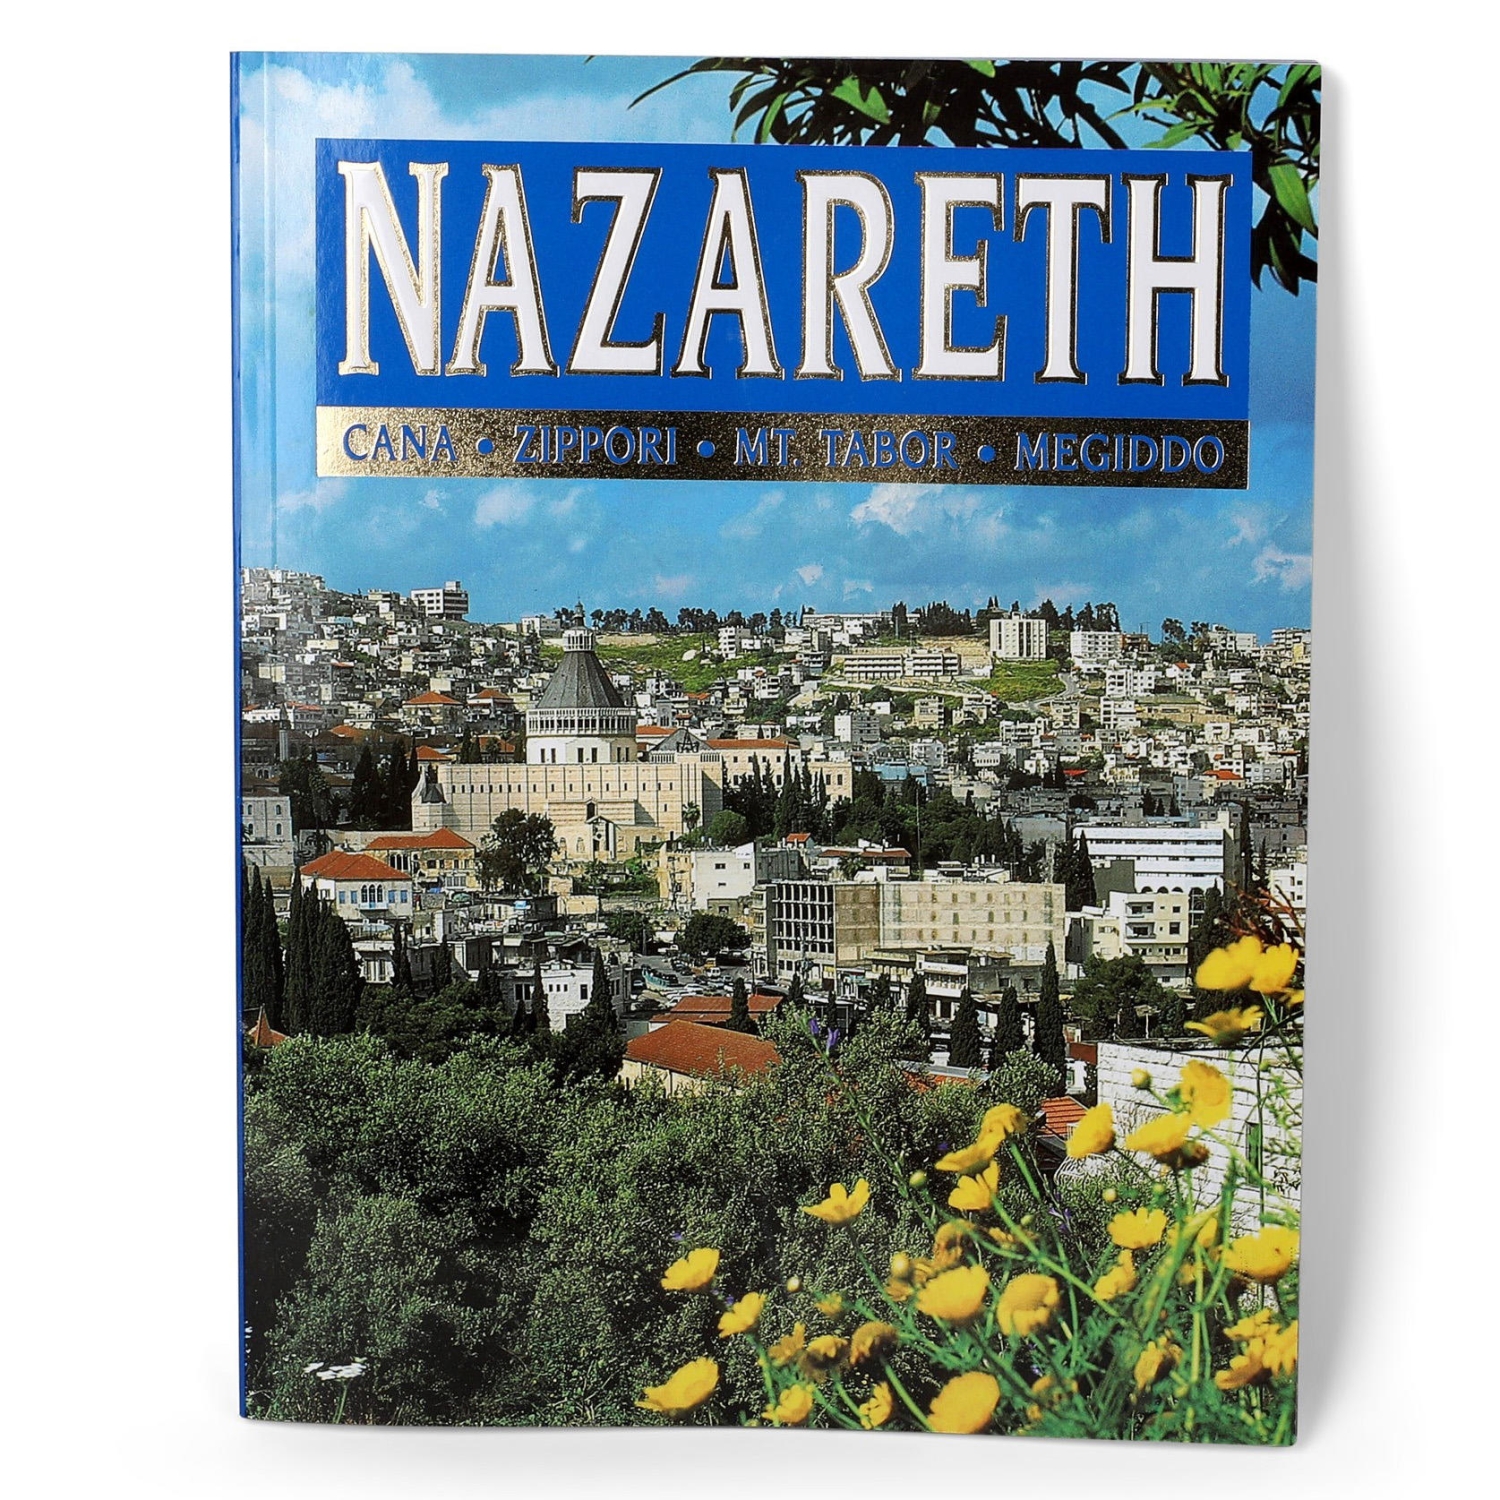 Nazareth: Cana - Zippori - Mt. Tabor - Meggido (Paperback) - 1